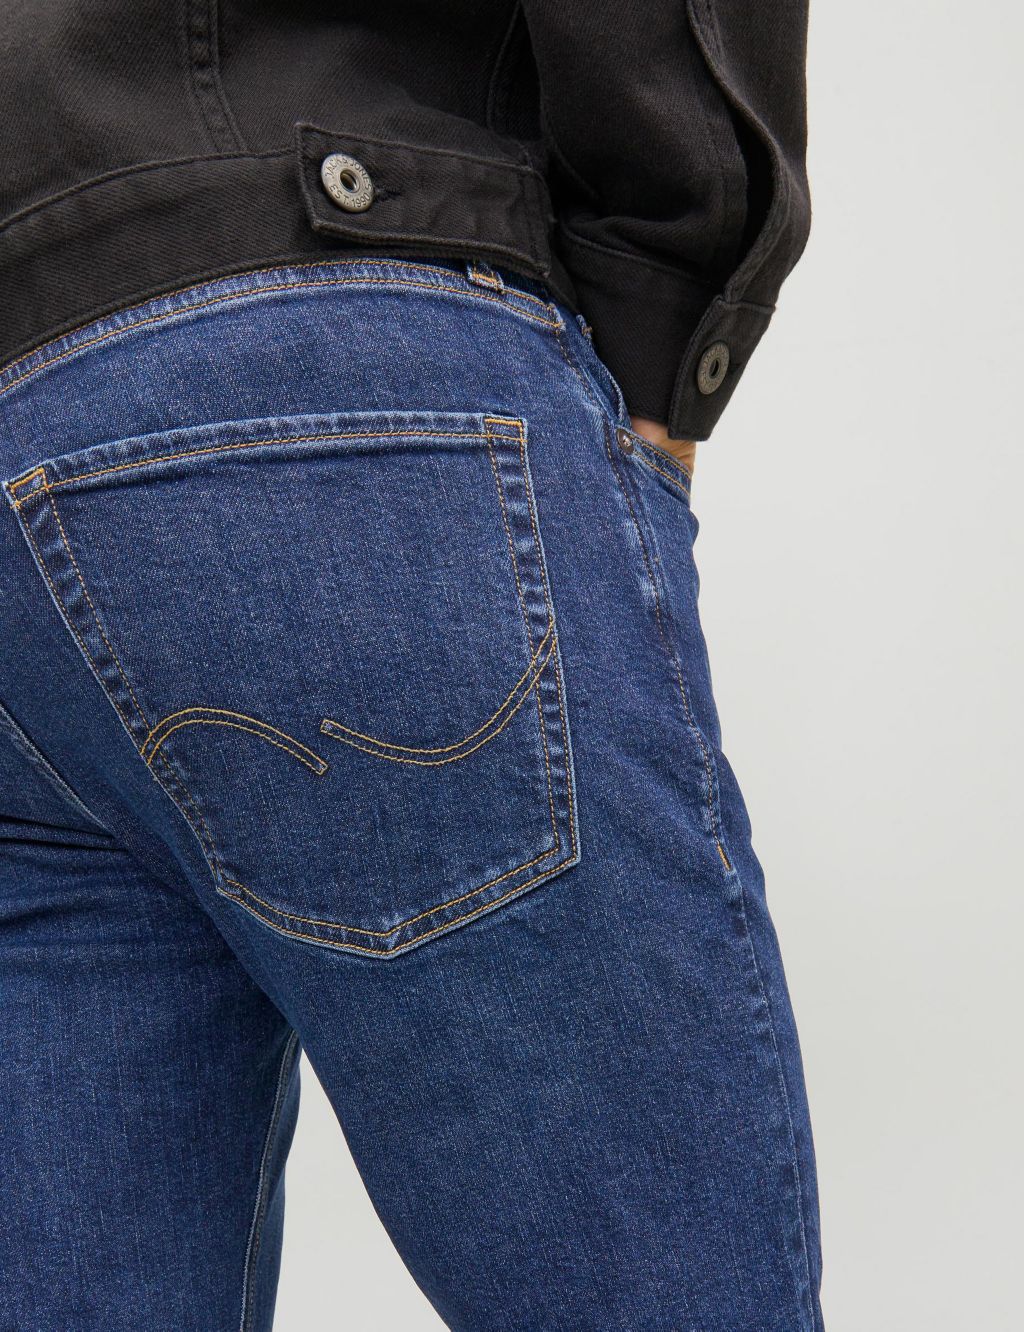 Tapered Fit 5 Pocket Jeans image 5